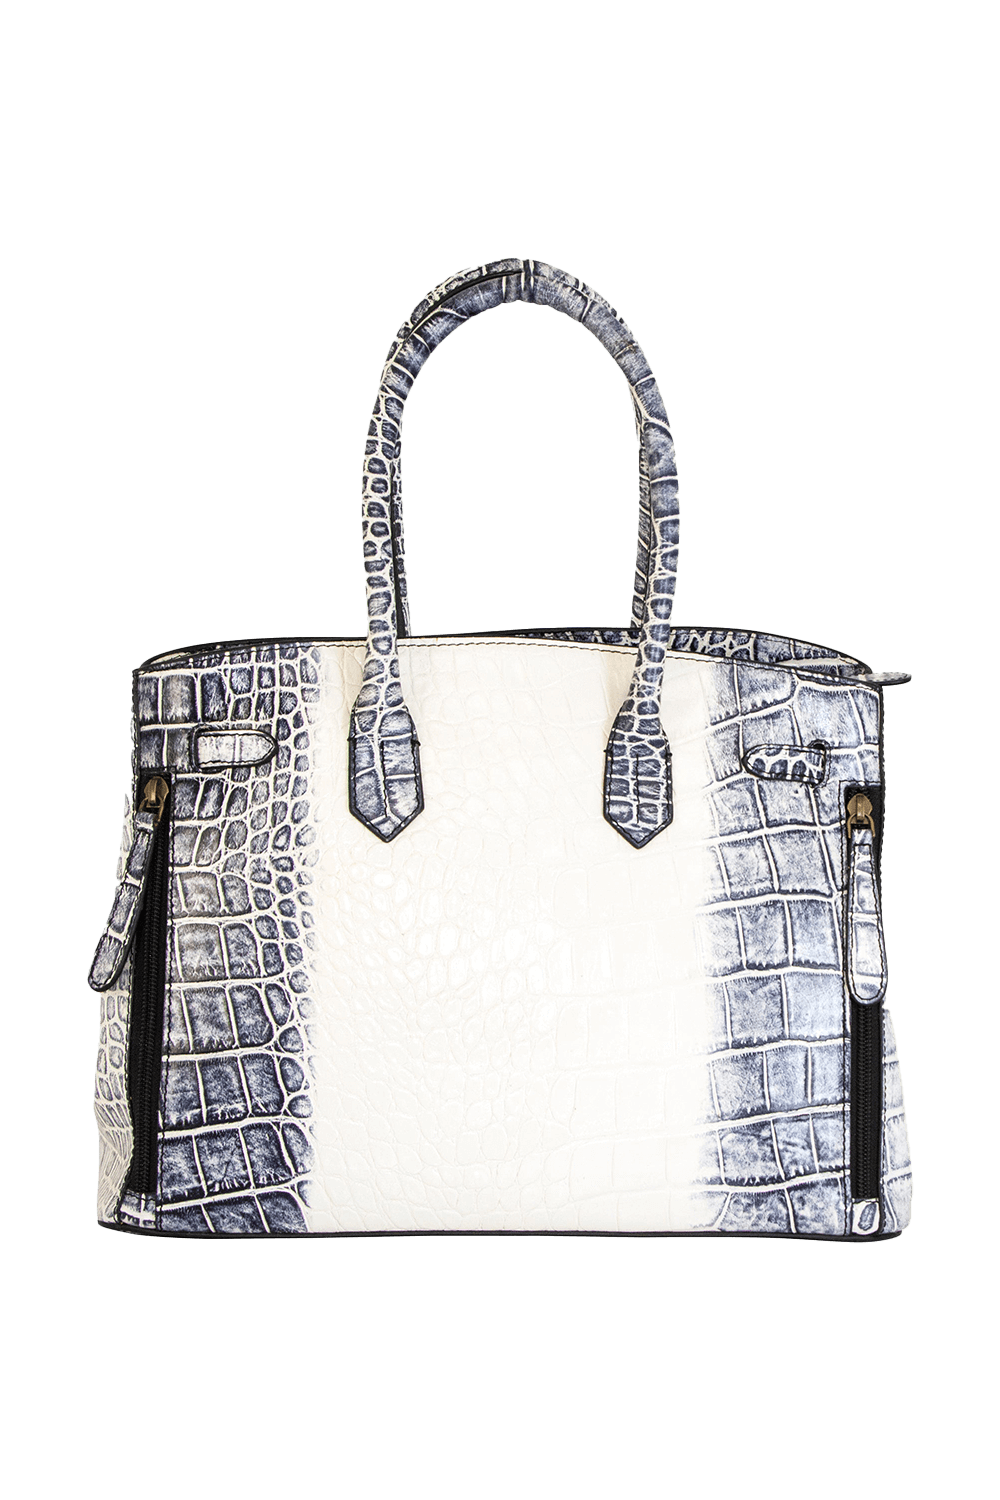 Smith & Wesson Concealed Carry Croc Handbag